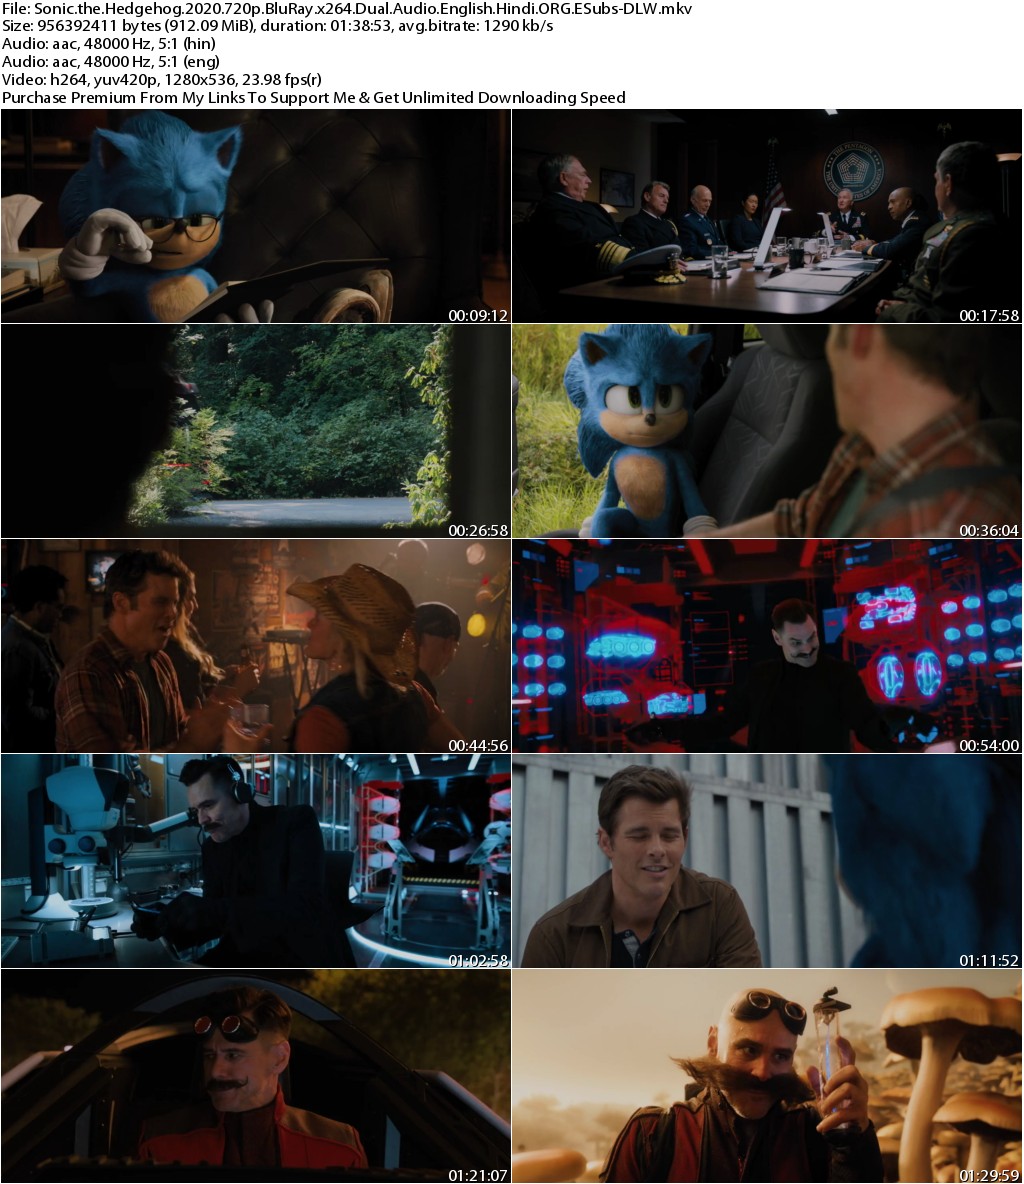 Sonic the Hedgehog (2020) 720p BluRay x264 Dual Audio English Hindi ORG ESubs-DLW